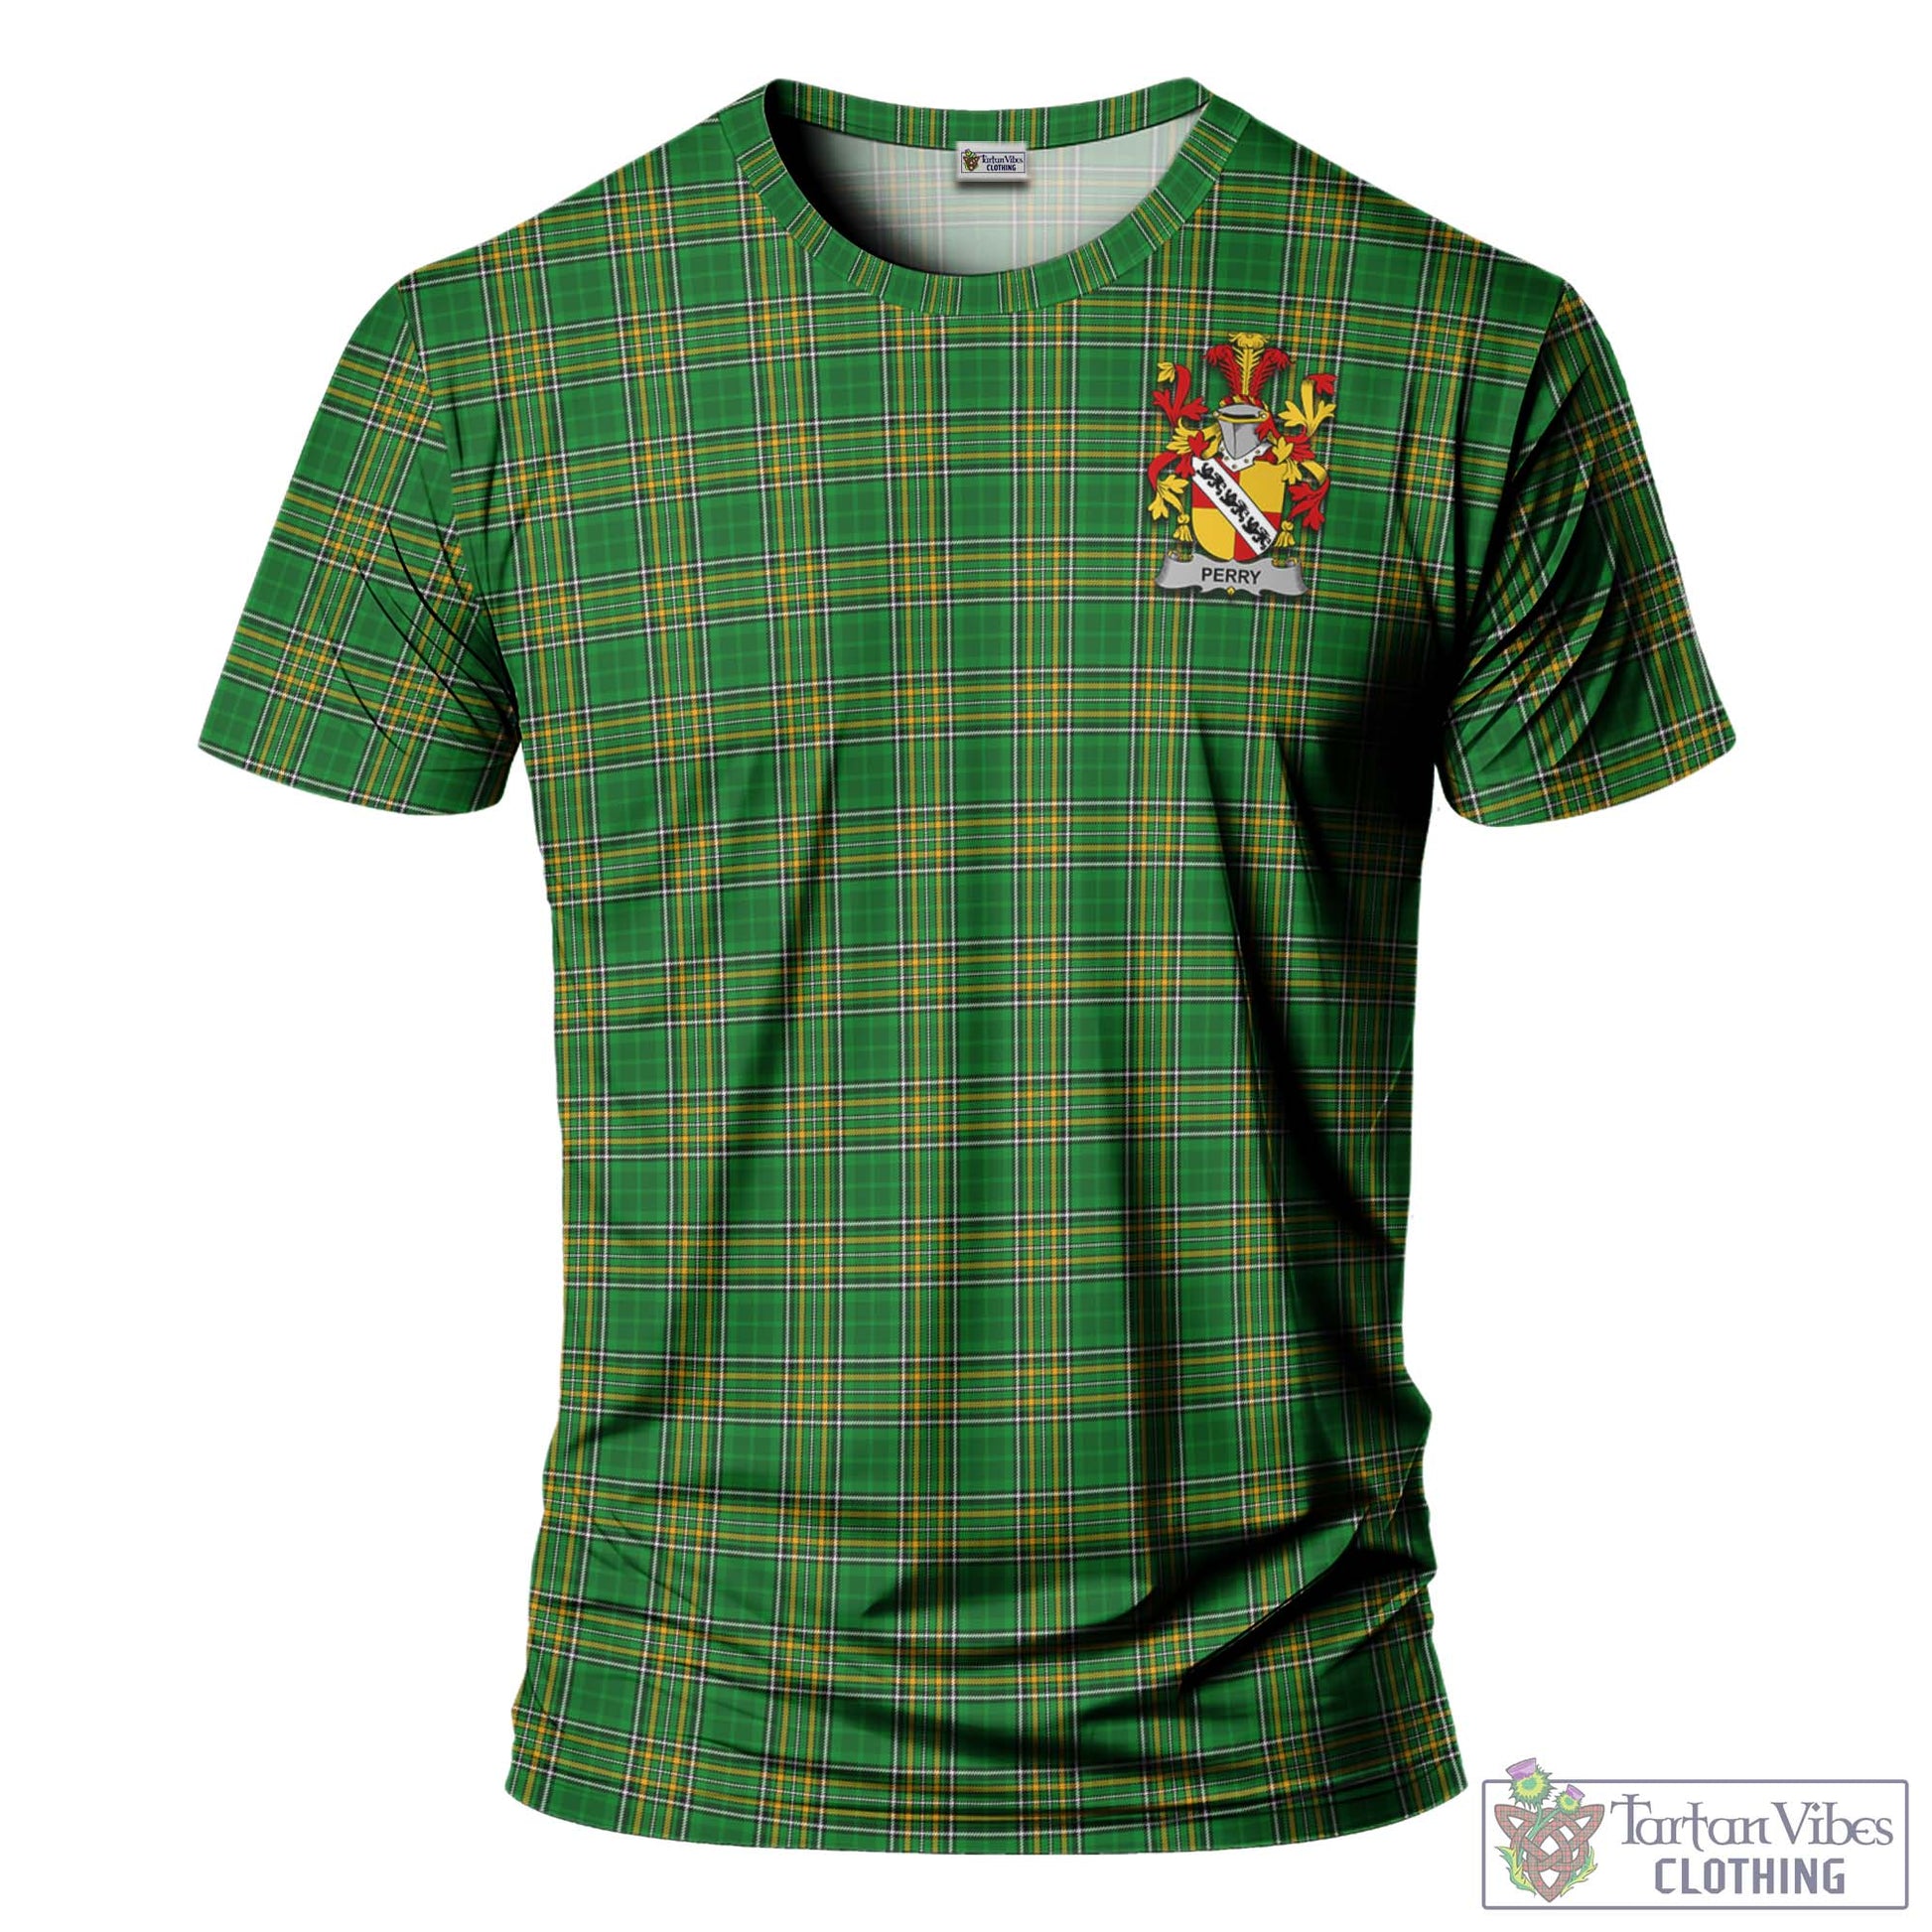 Tartan Vibes Clothing Perry Ireland Clan Tartan T-Shirt with Family Seal